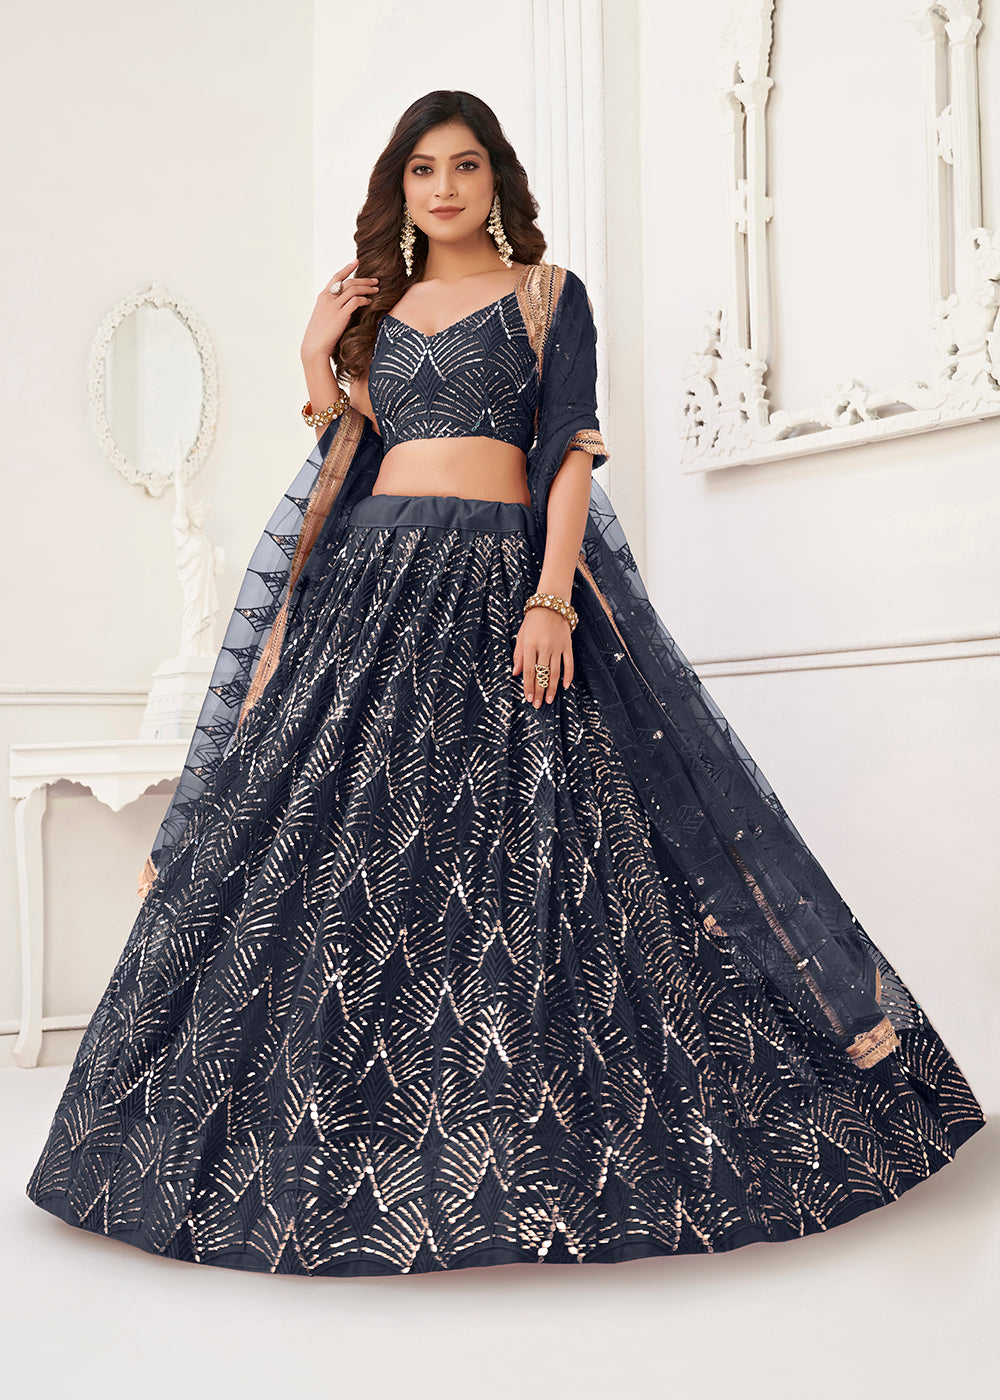 Buy Now Embroidered Net Midnight Blue Sangeet & Haldi Wedding Lehenga Choli Online in USA, UK, Canada & Worldwide at Empress Clothing.